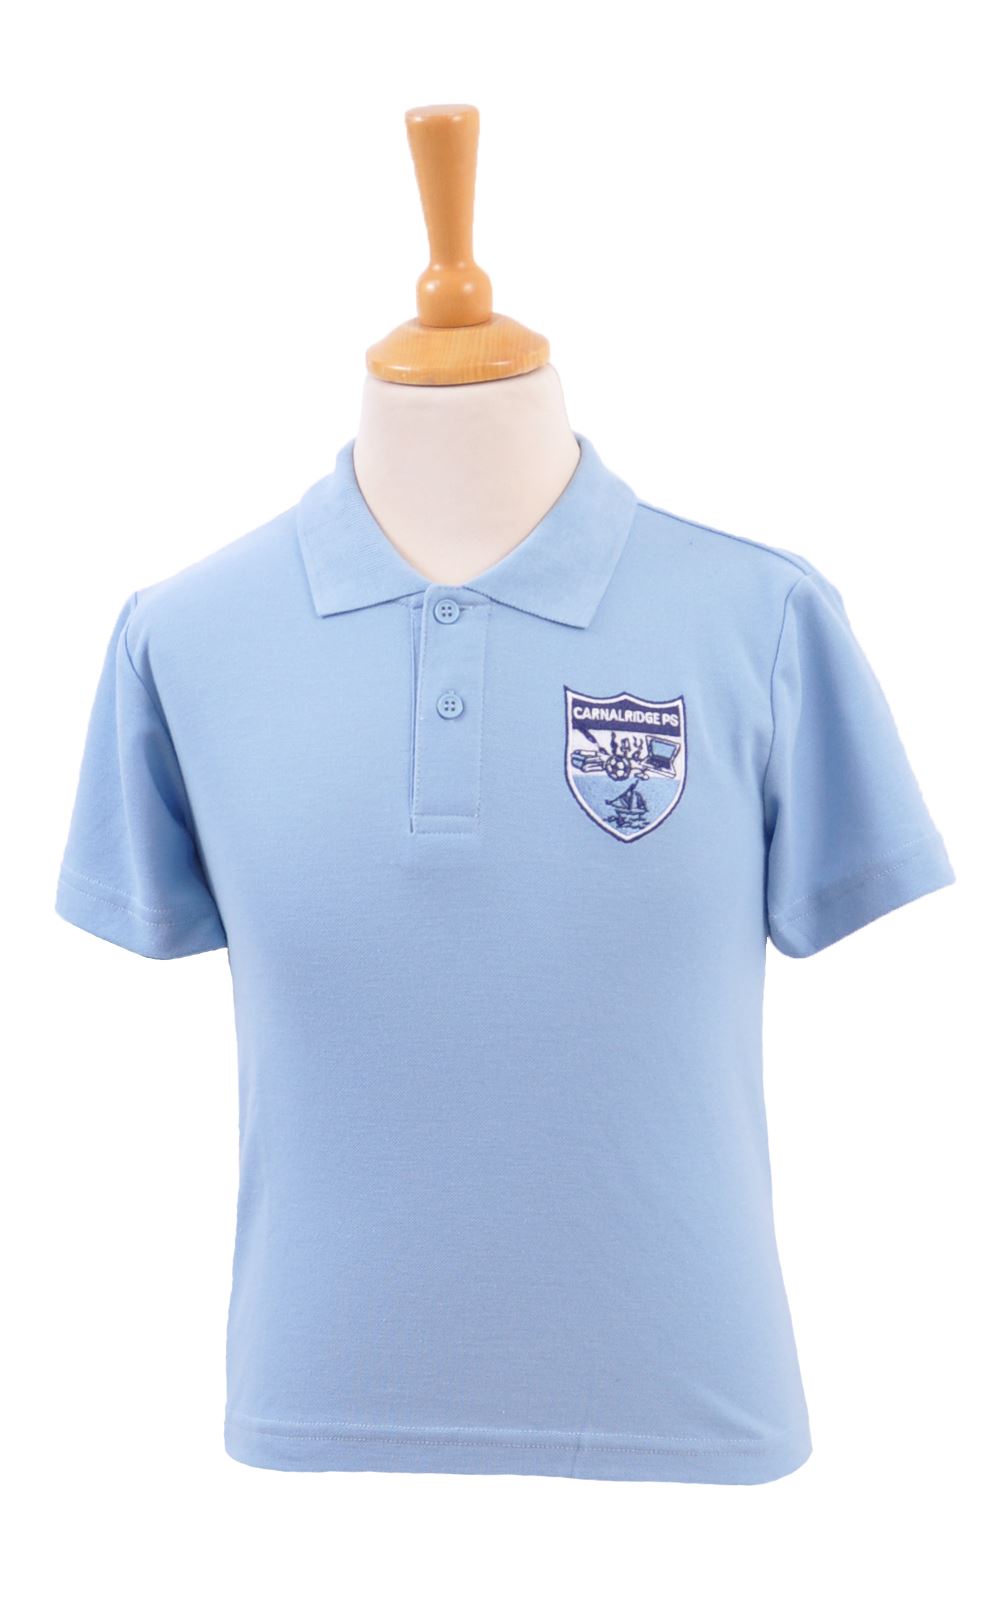 S&T Moore. Carnalridge PS Polo Shirt - Woodbank